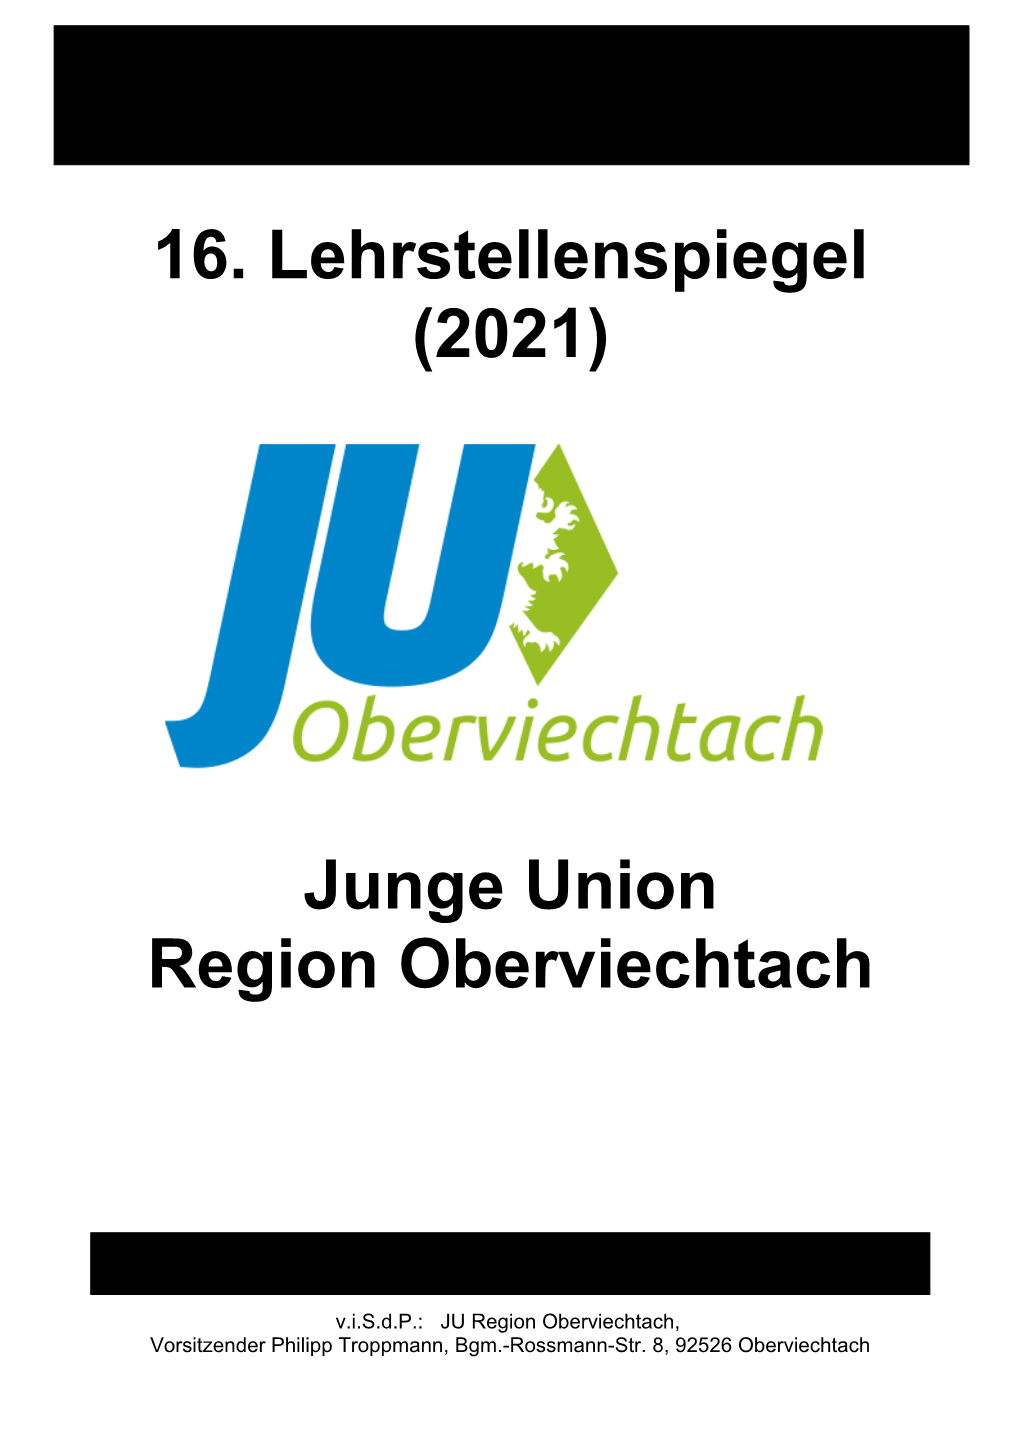 16. Lehrstellenspiegel (2021) Junge Union Region Oberviechtach